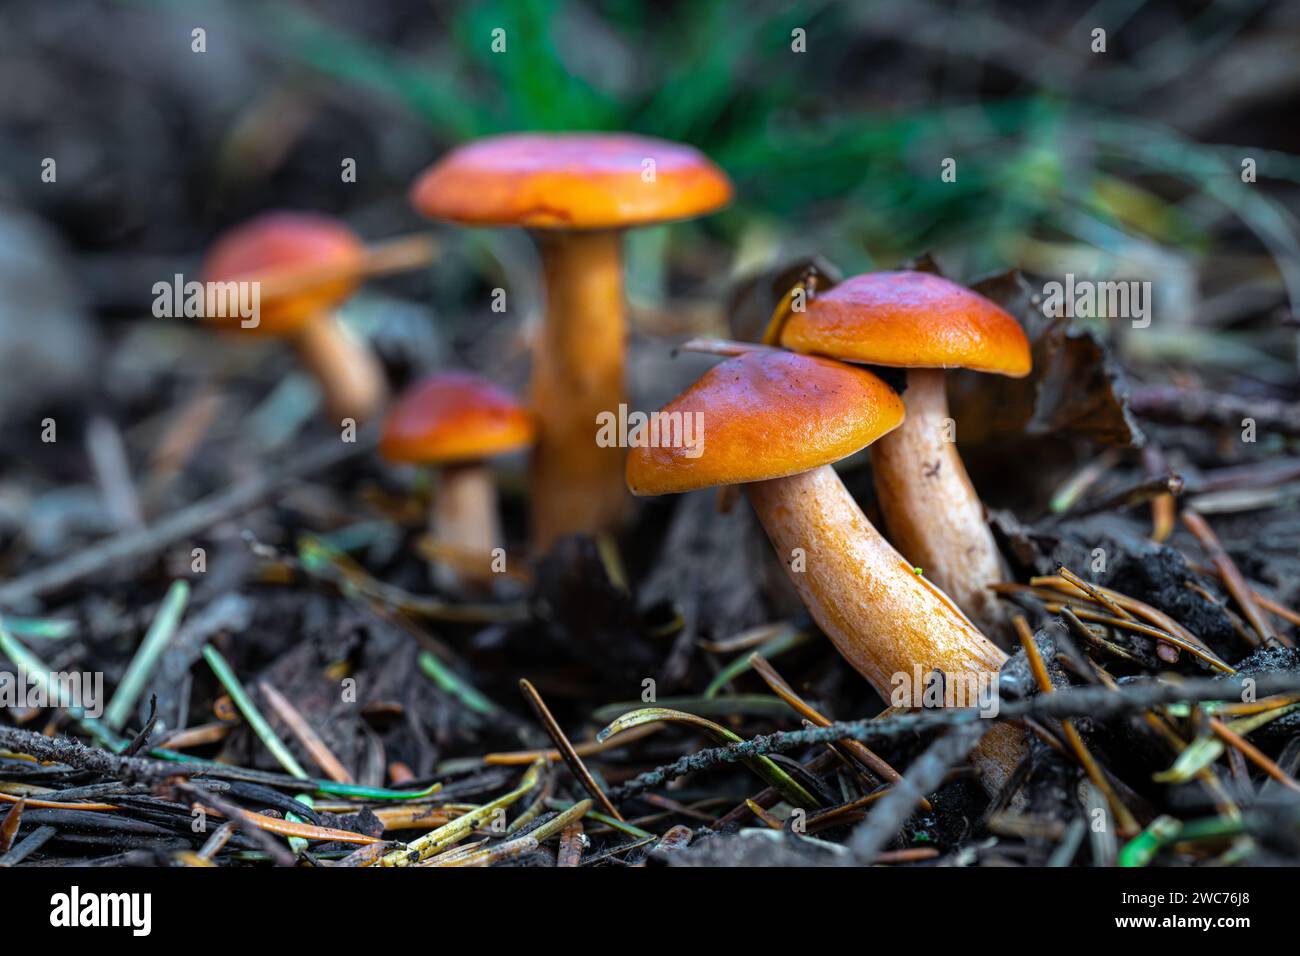 A Group of Hygrophorus Mushrooms Stock Photo